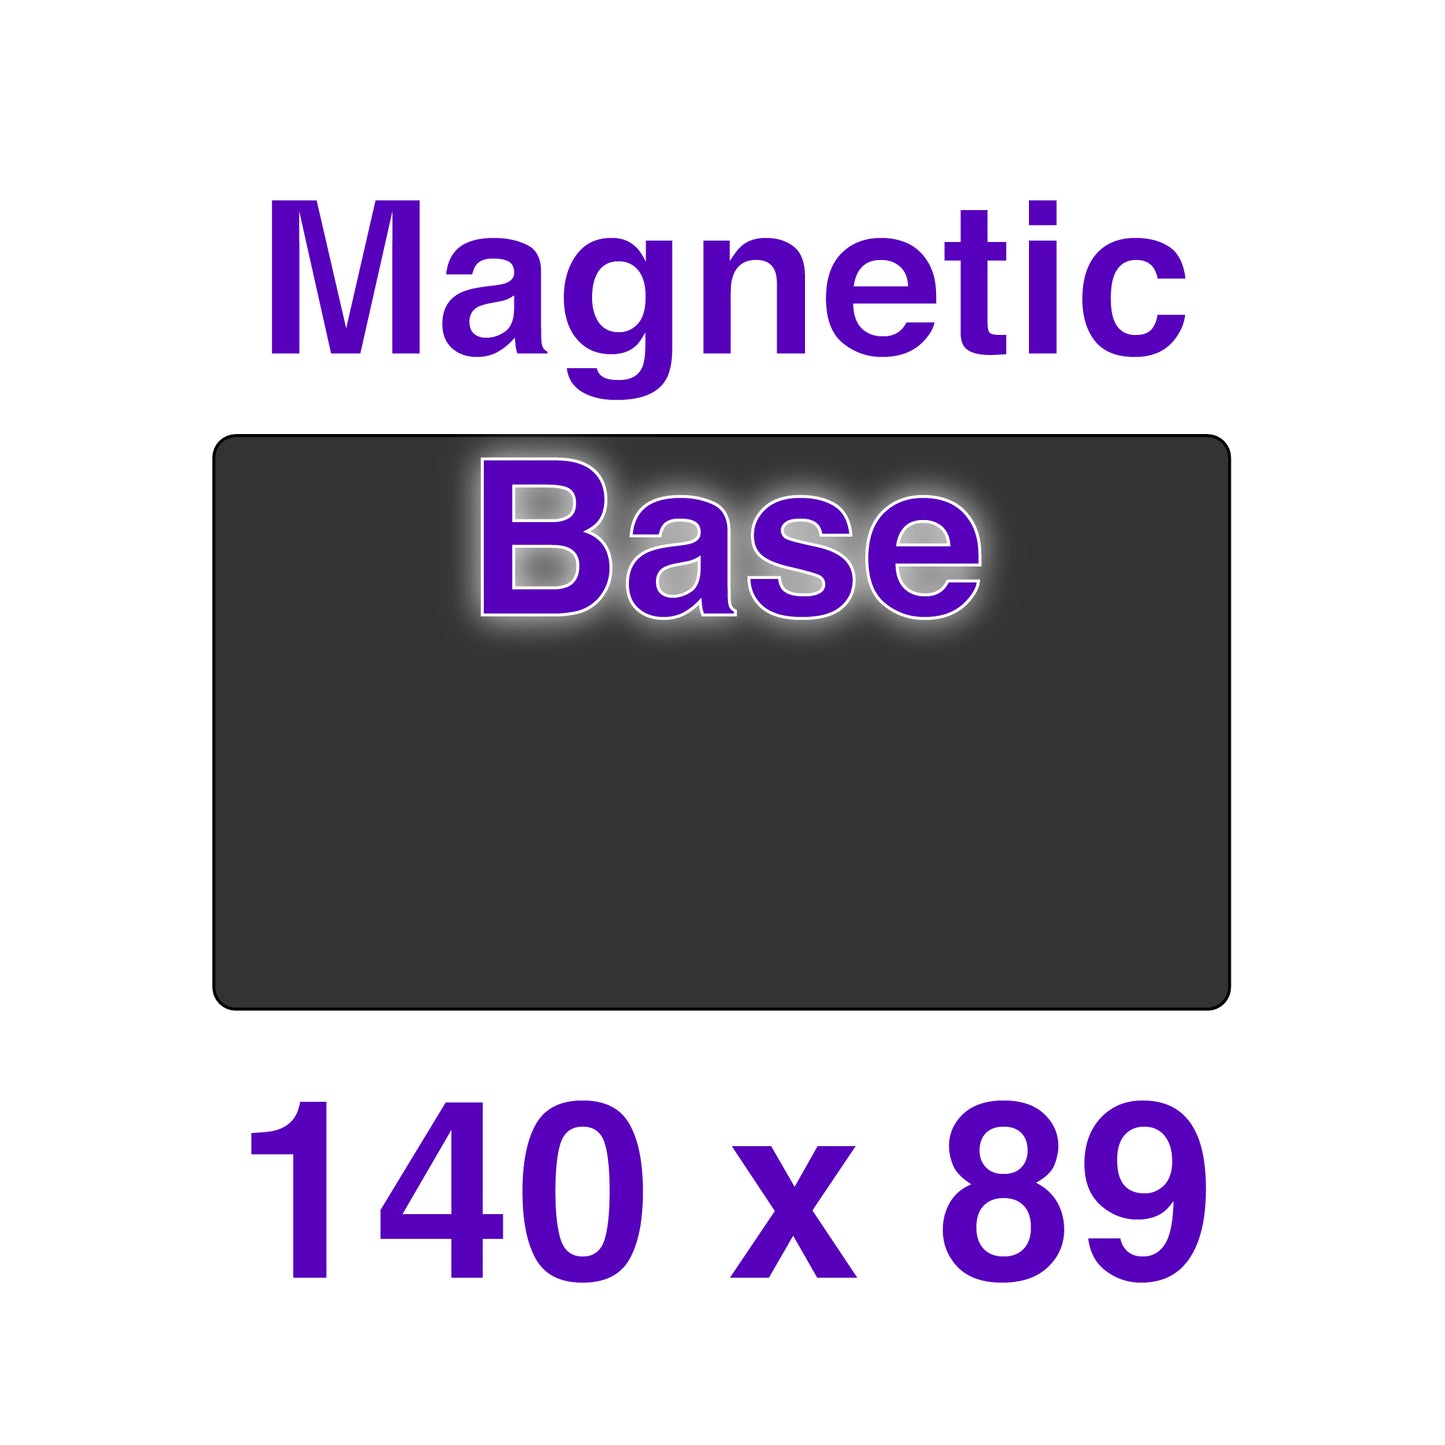 Magnetic Base - 140 x 89